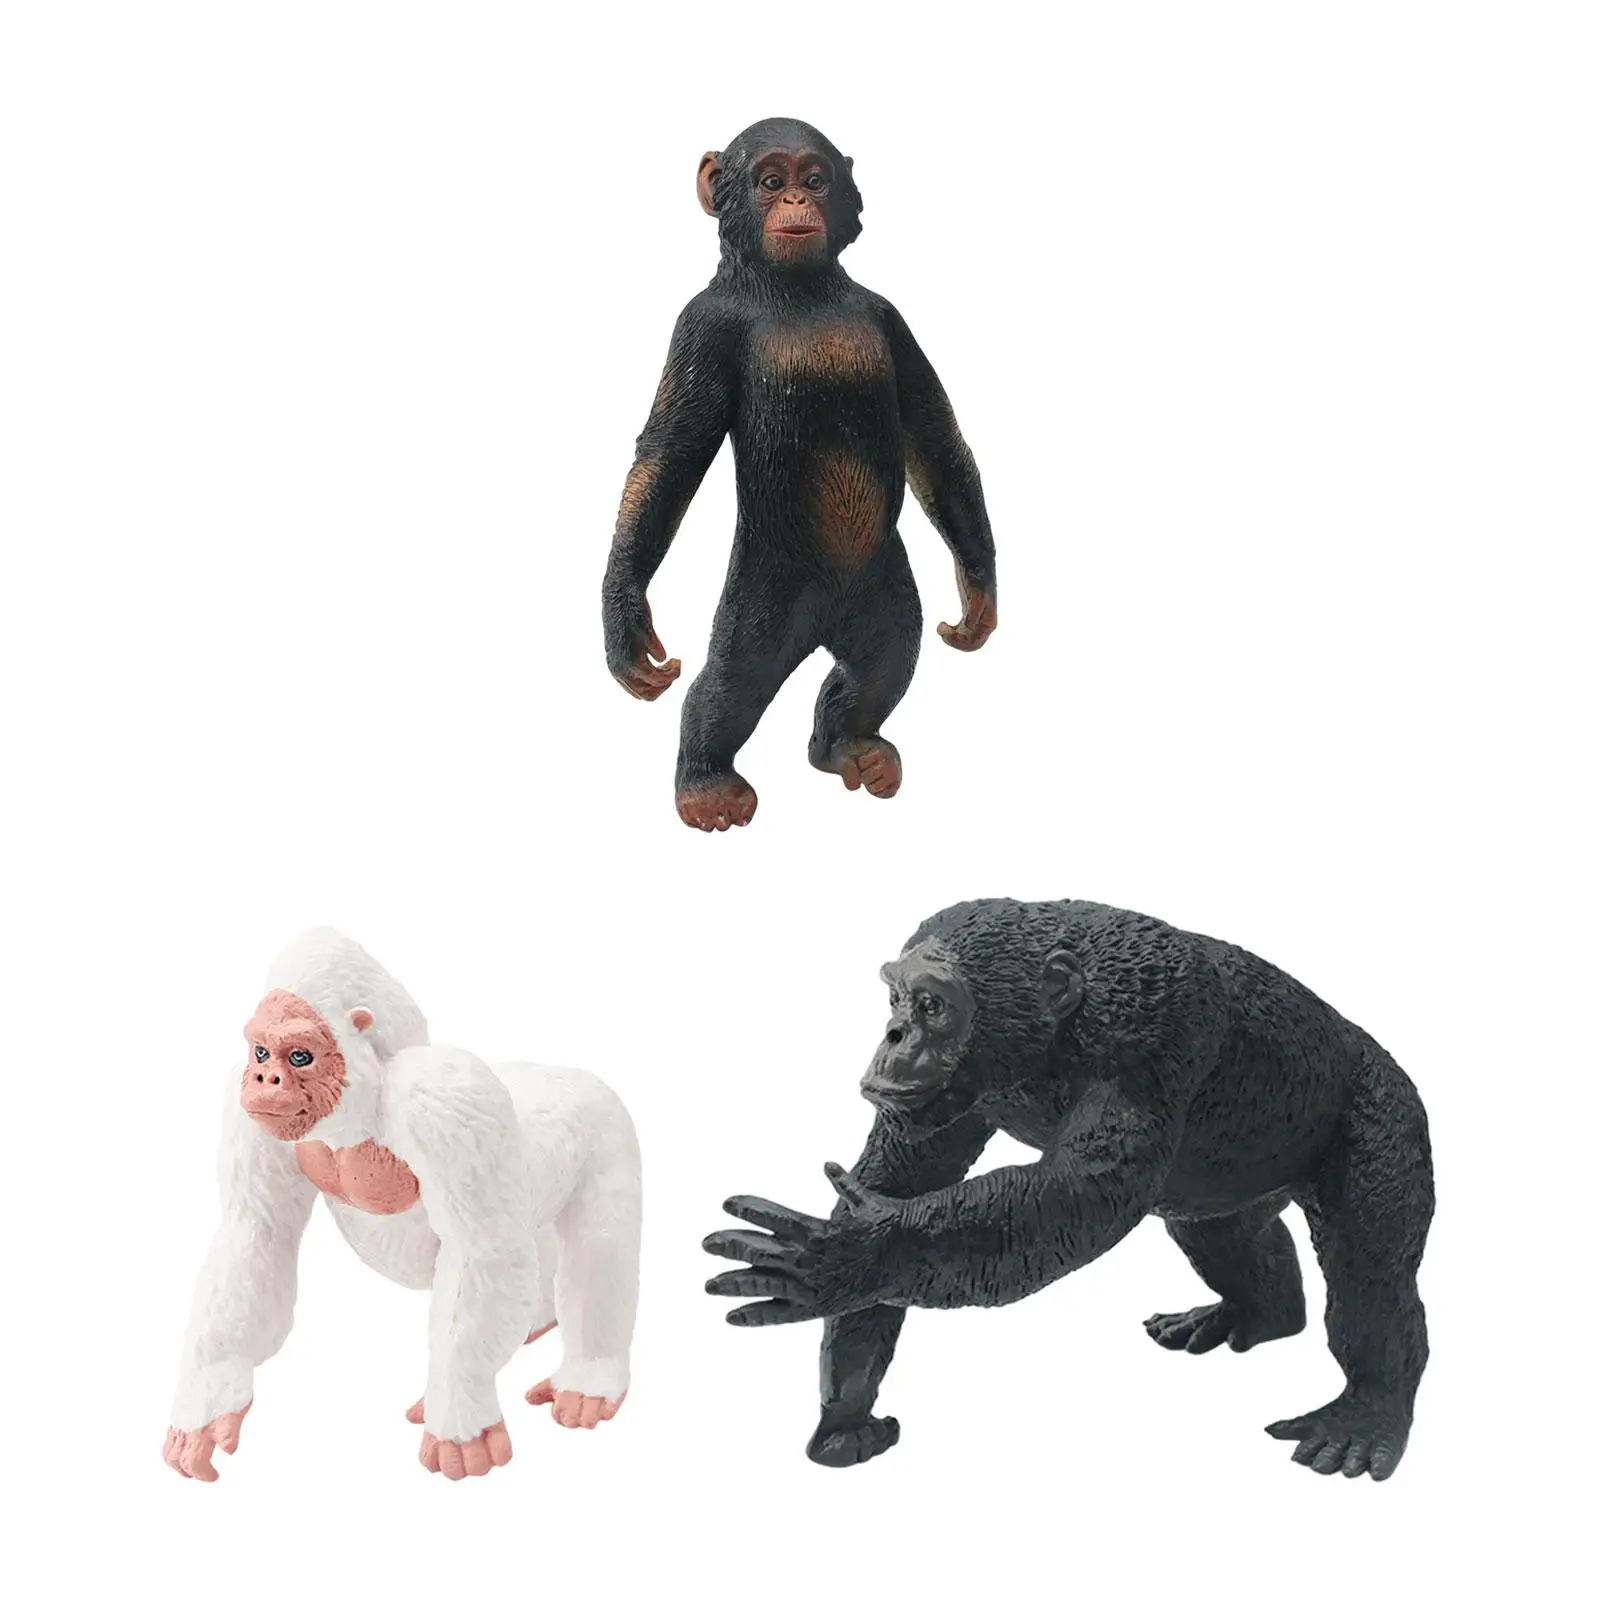 

Lifelike Orangutan Figures Gorilla Action Figure Toy Model Figurine Gorilla Animals Statues for Party Favor Birthday Gift